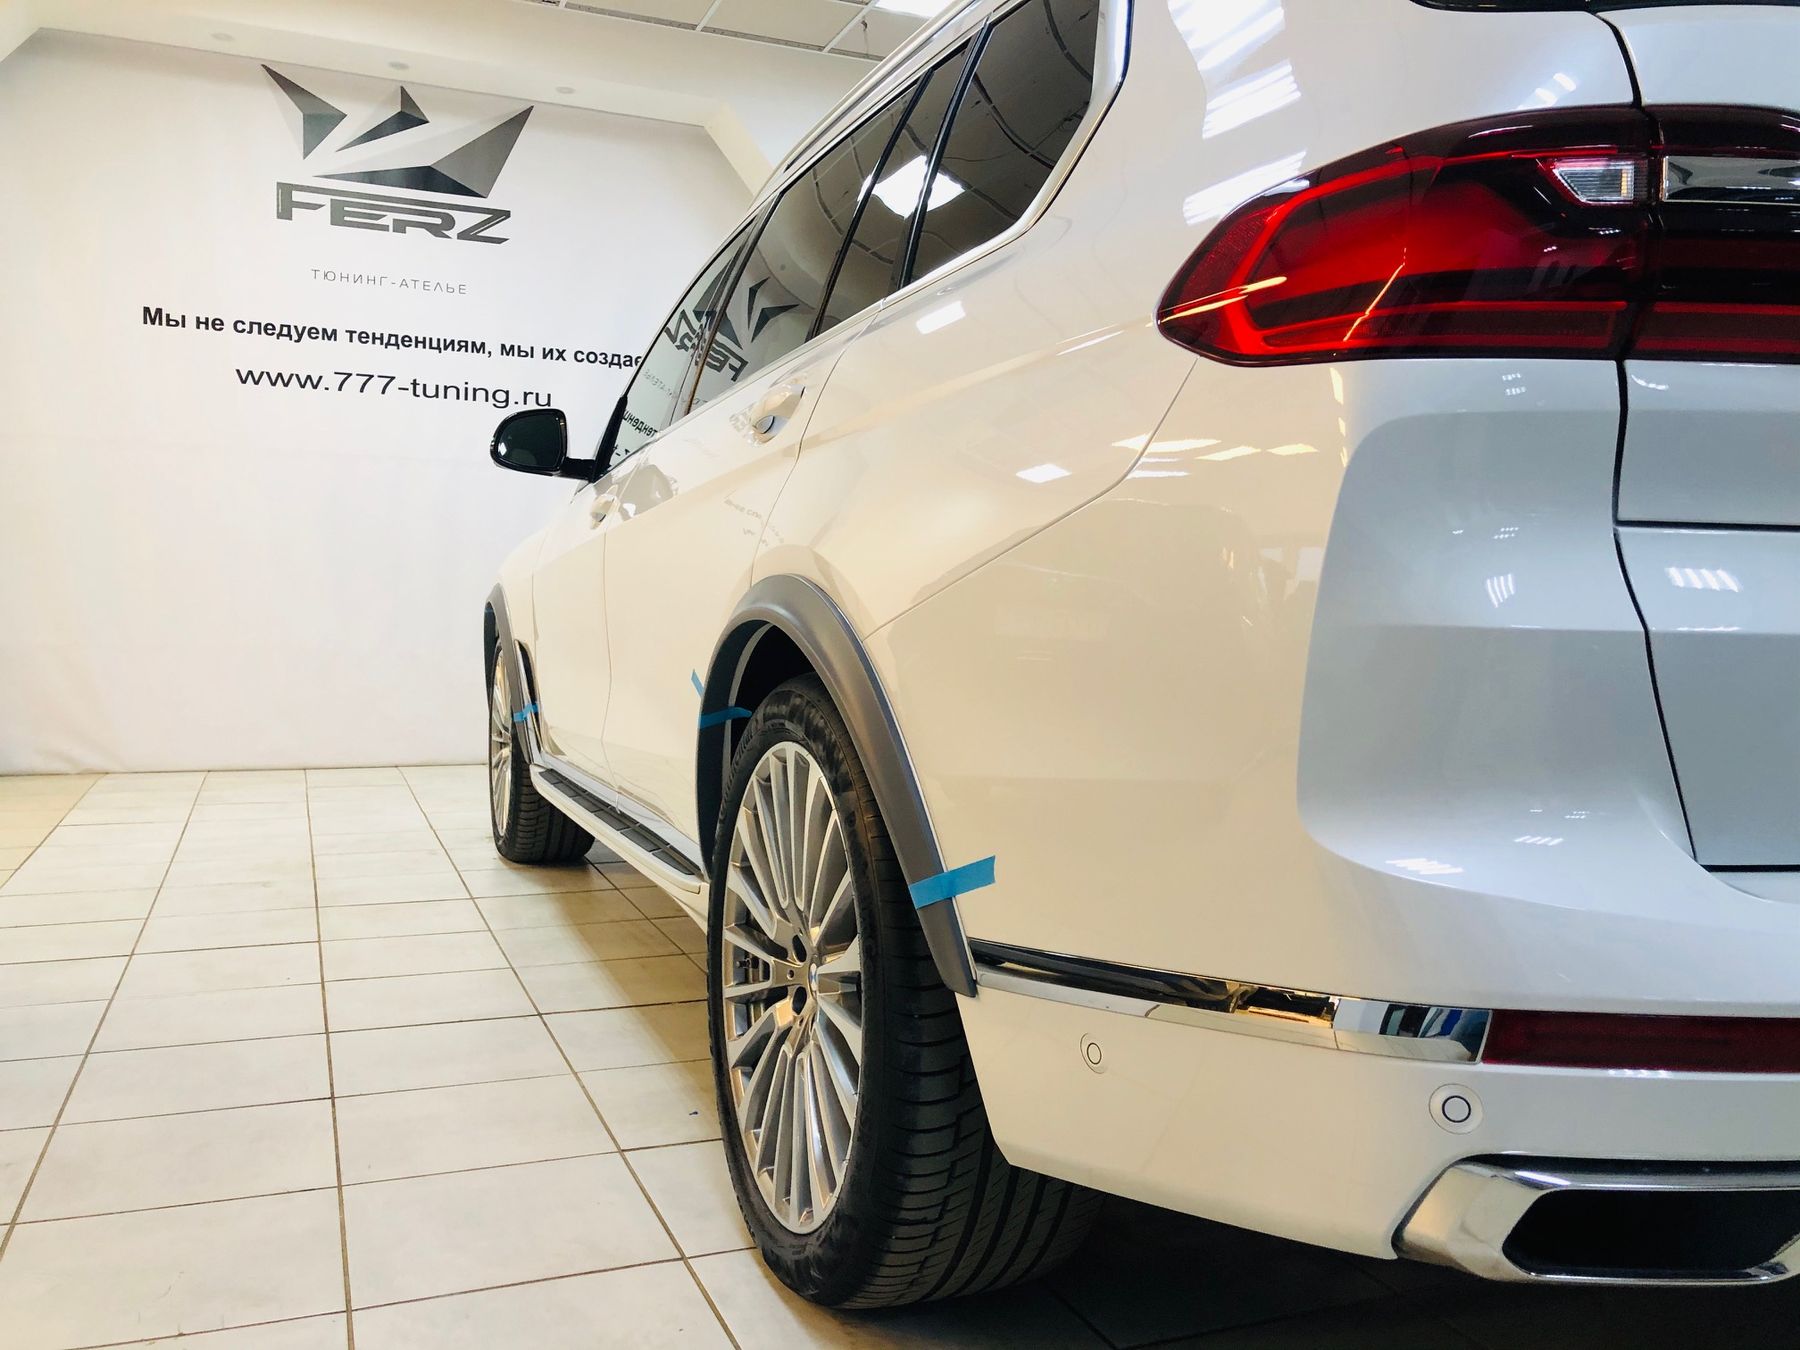 Расширенные арки FERZ для BMW X7 G07